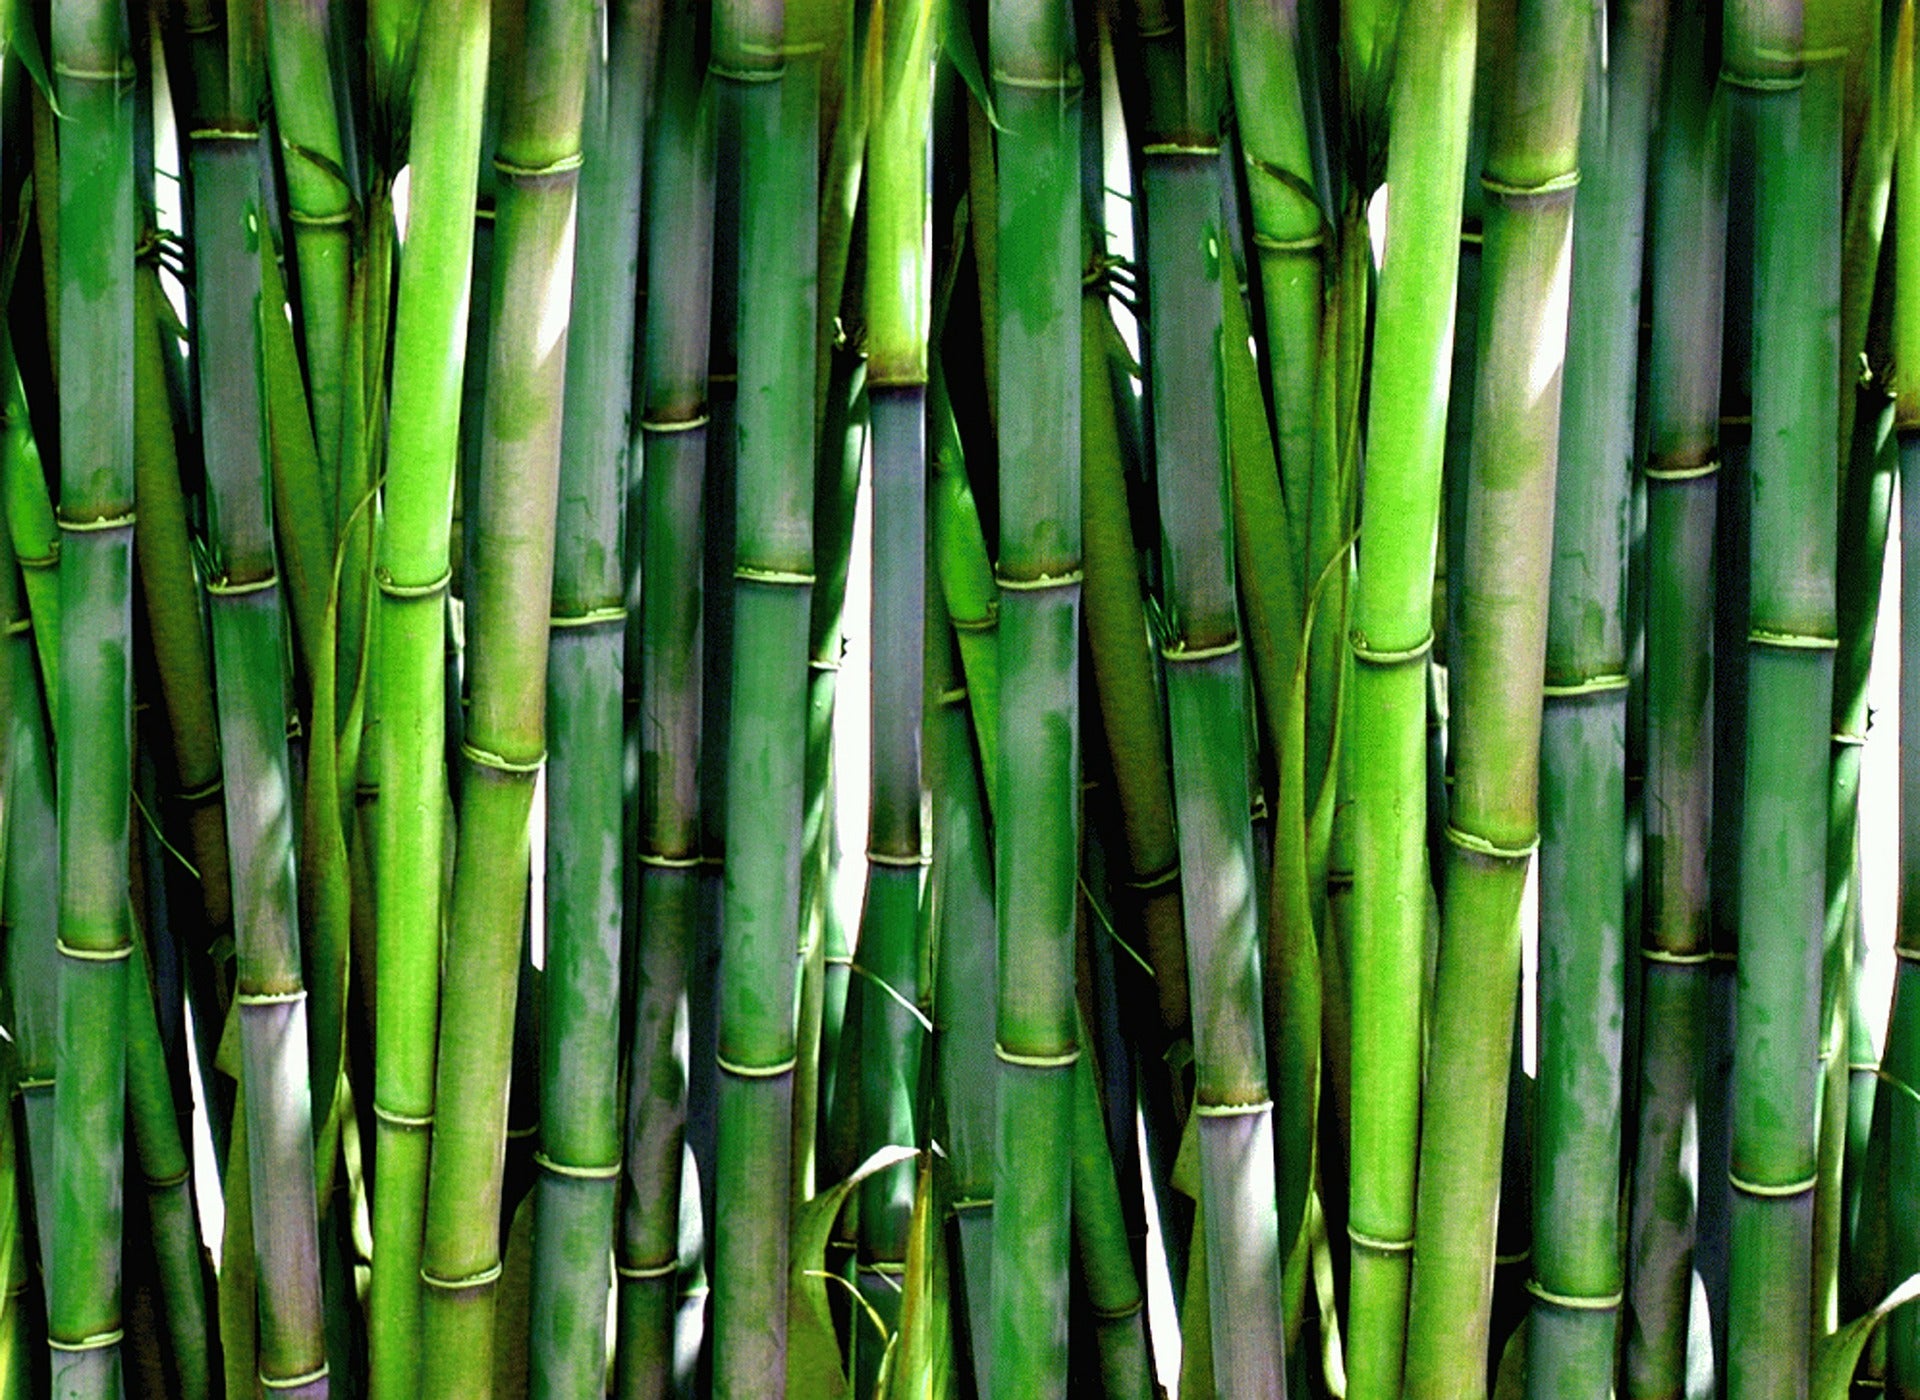 Bamboo Charcoal Fabric vs Bamboo: Superior Fabric Material?